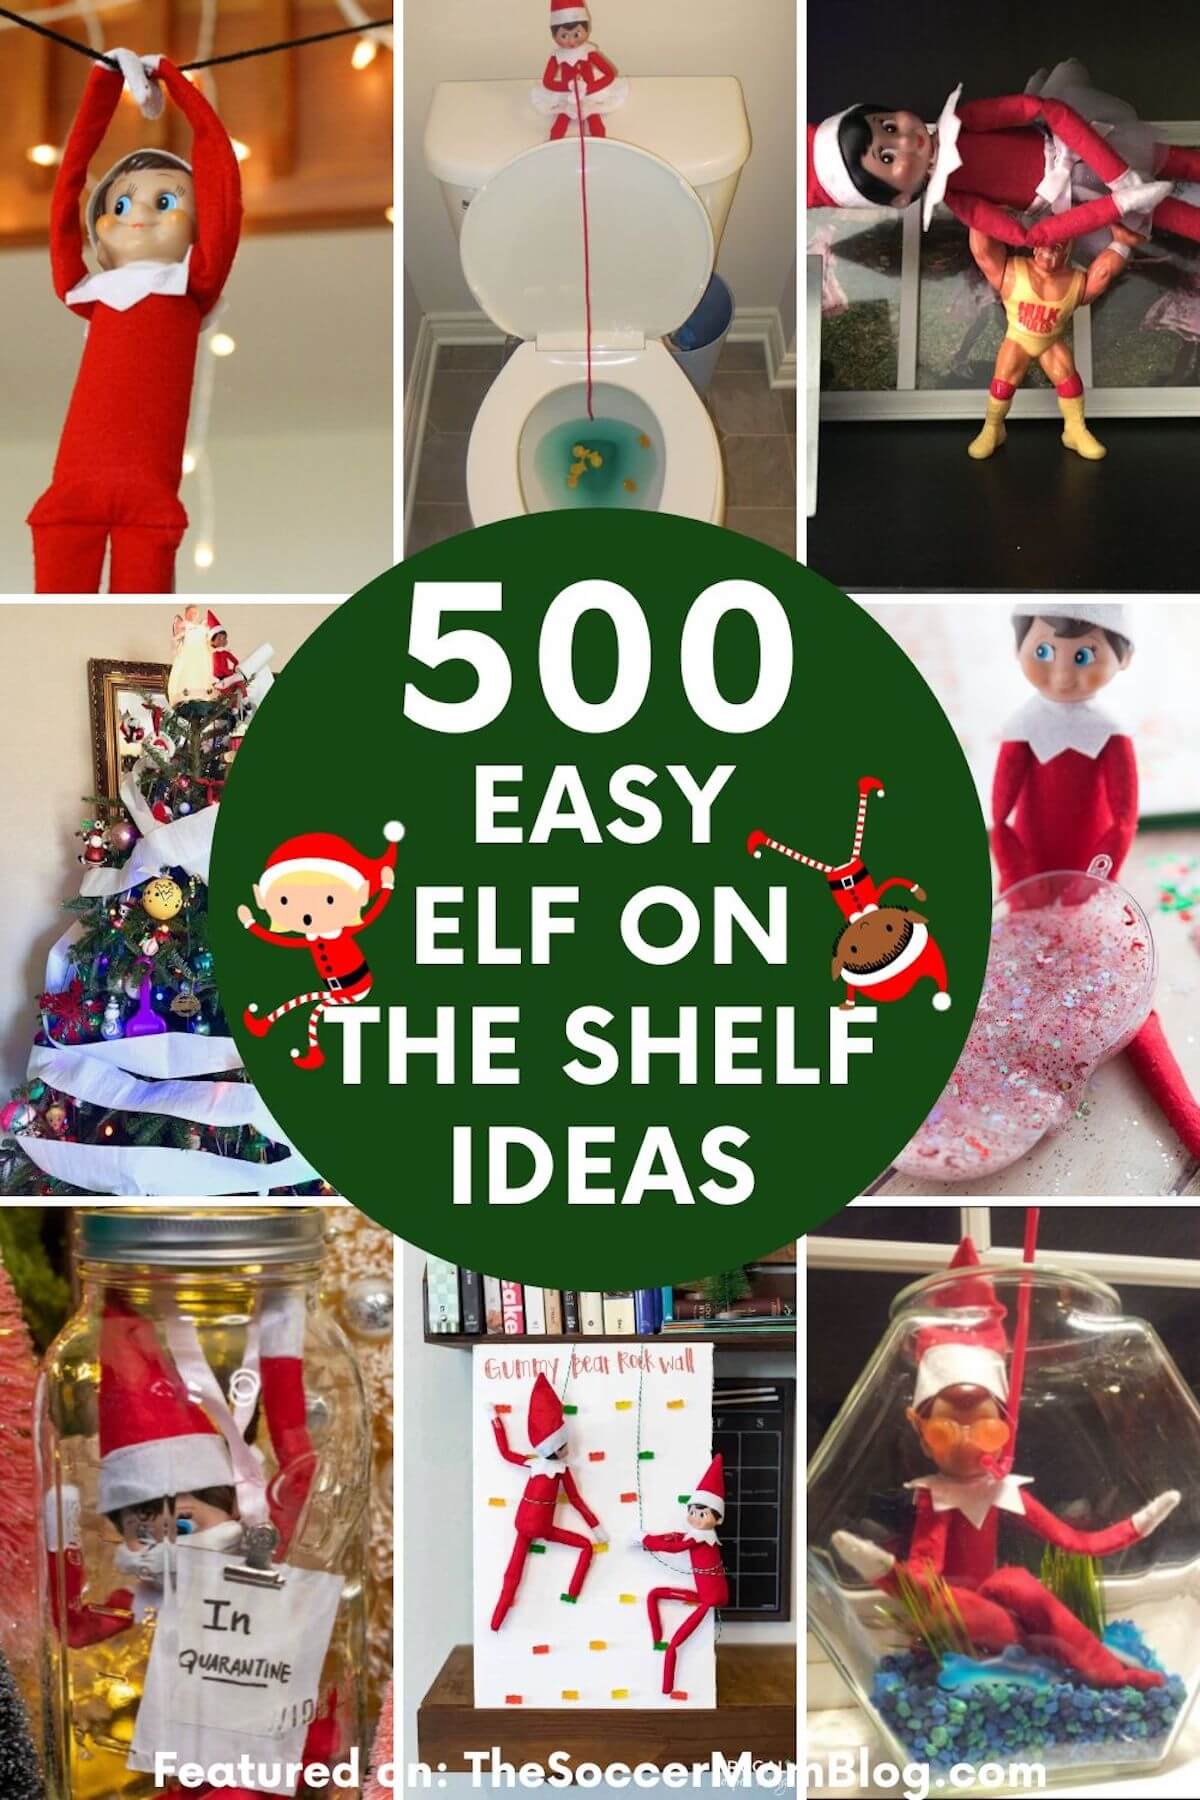 500 Easy Elf on the Shelf Ideas - The Soccer Mom Blog